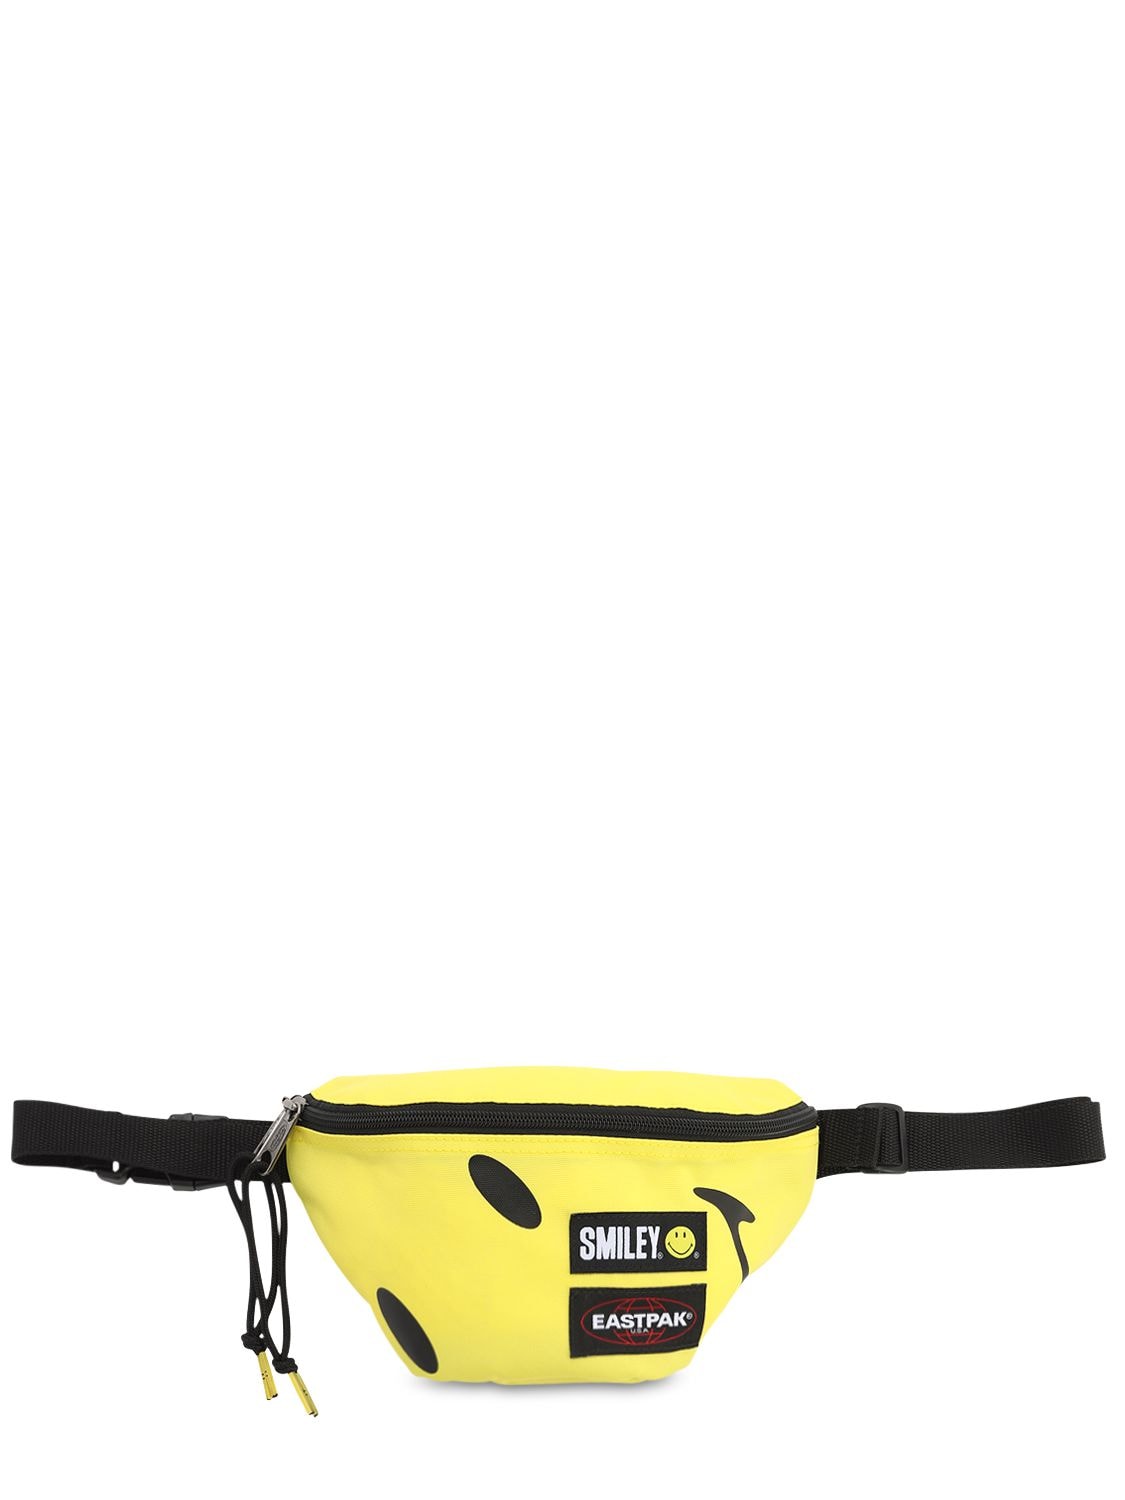 Eastpak Springer Smiley Belt Bag In Yellow